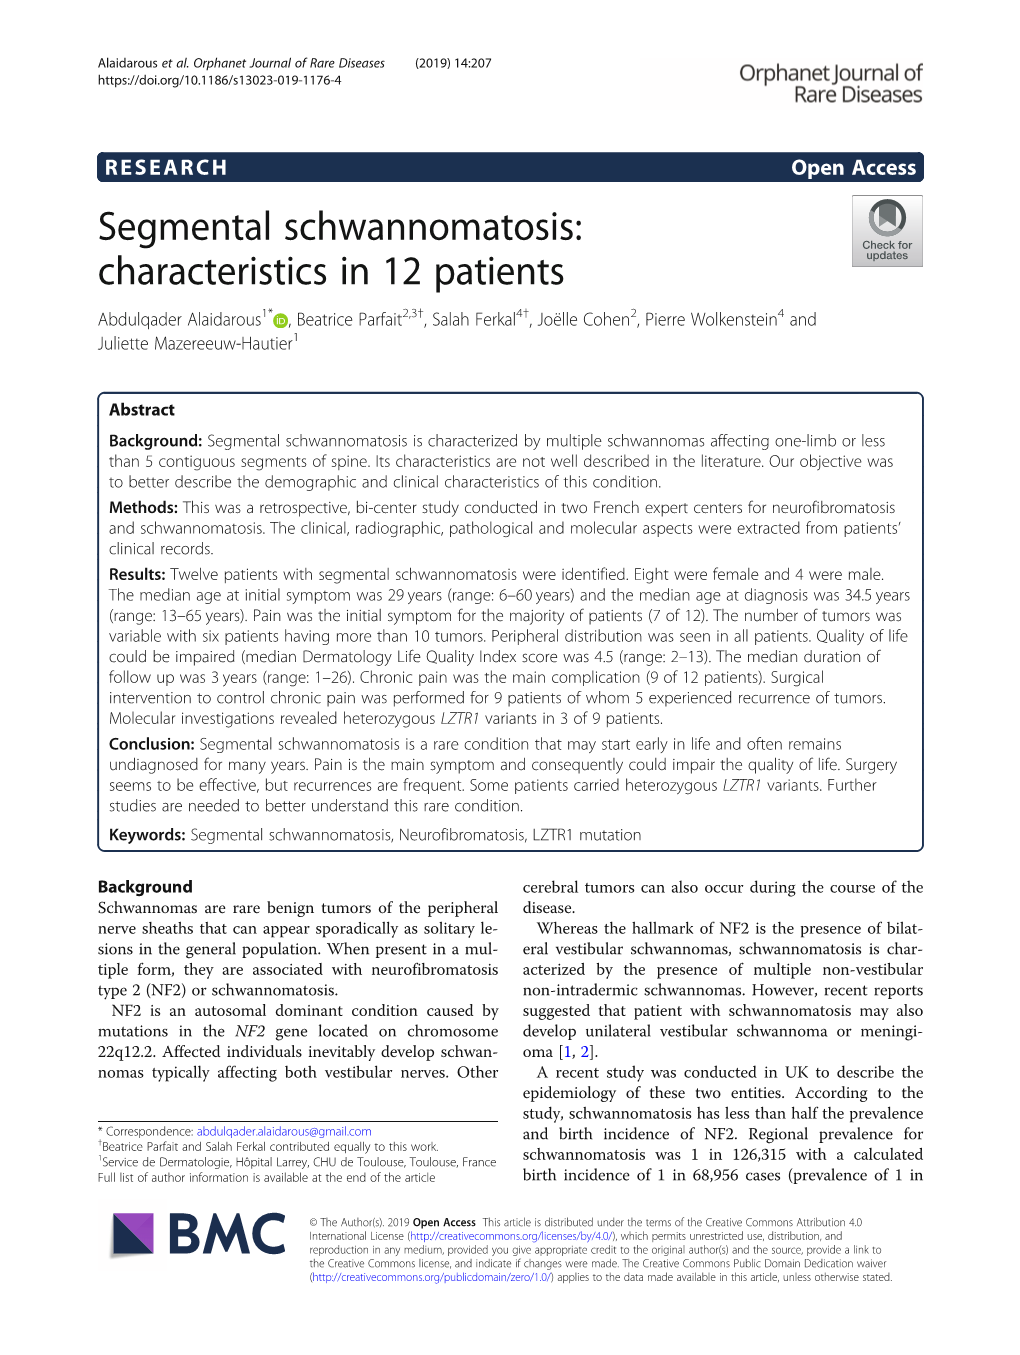 Segmental Schwannomatosis: Characteristics in 12 Patients